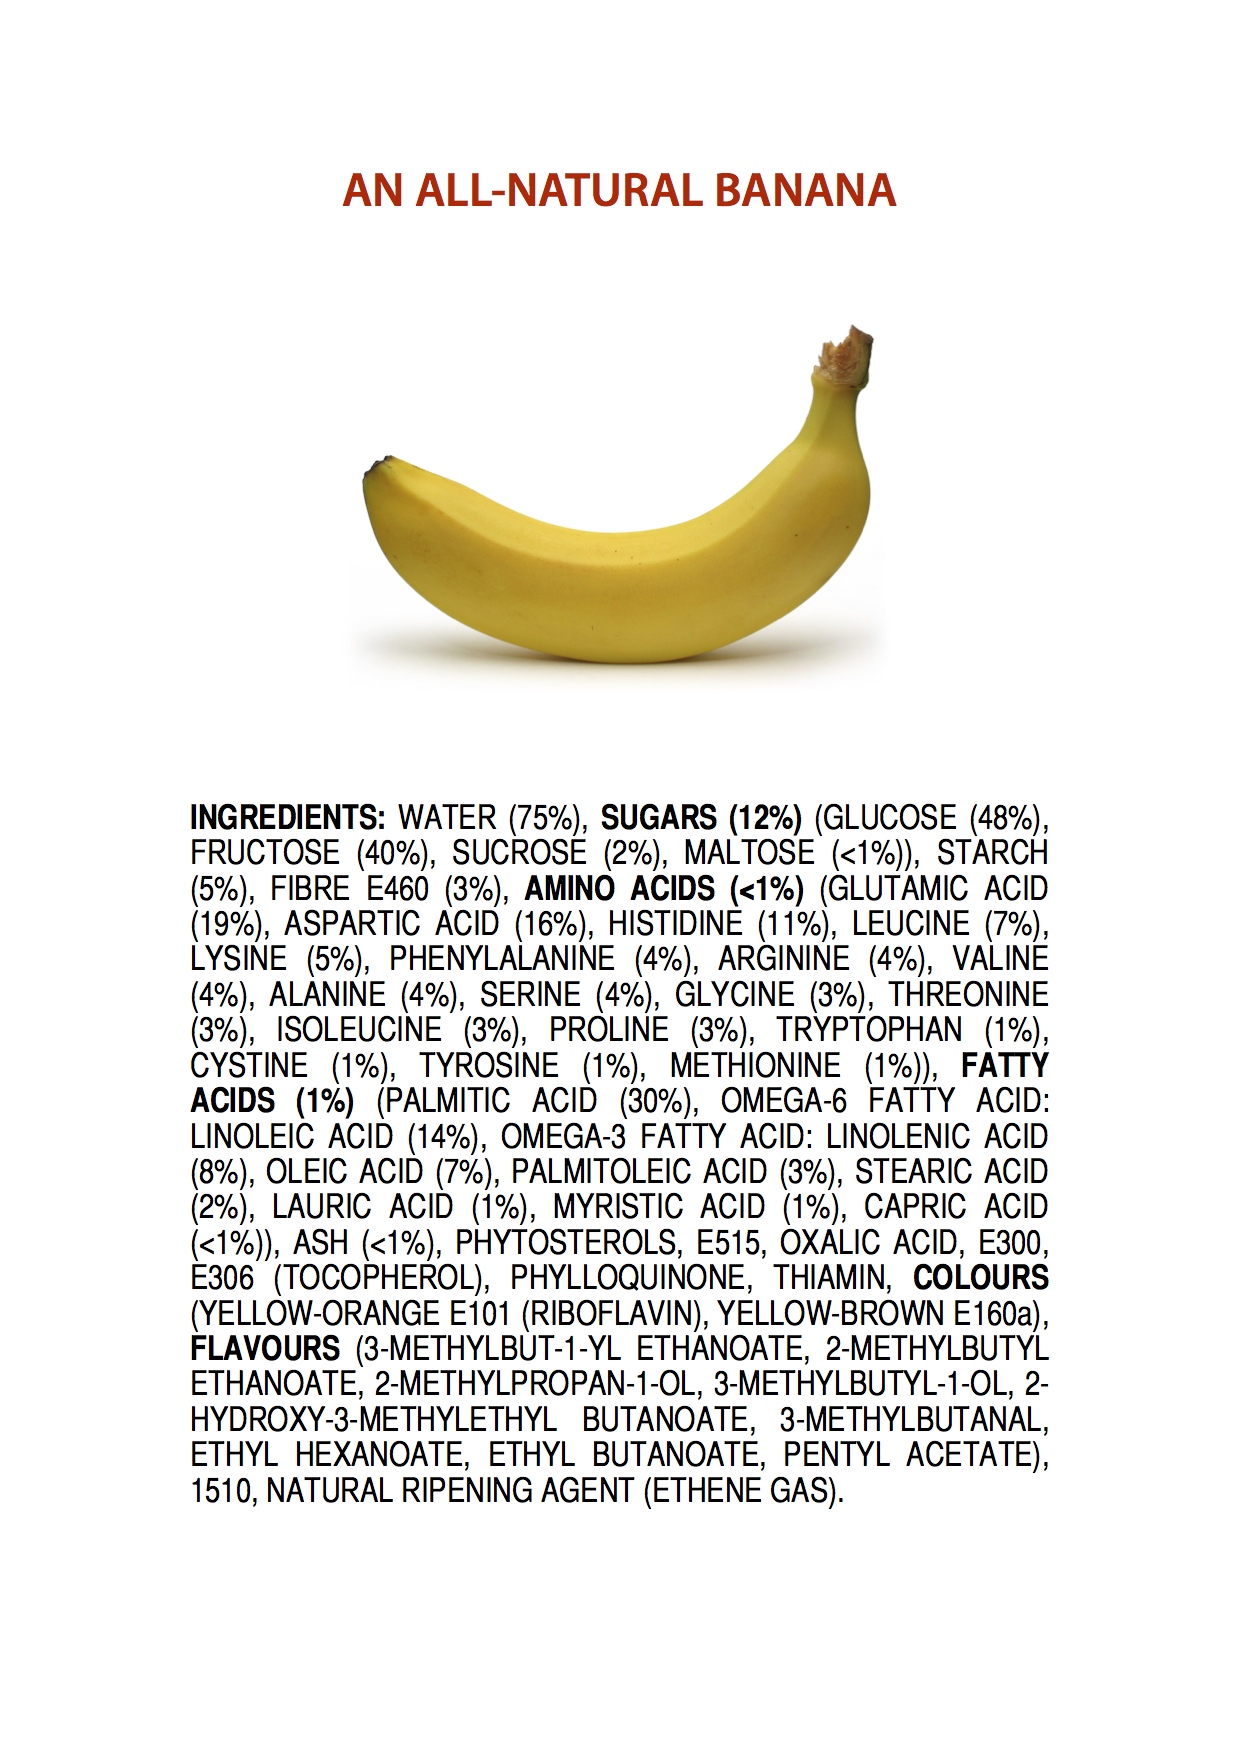 ingredients-of-a-banana-poster-4.jpeg